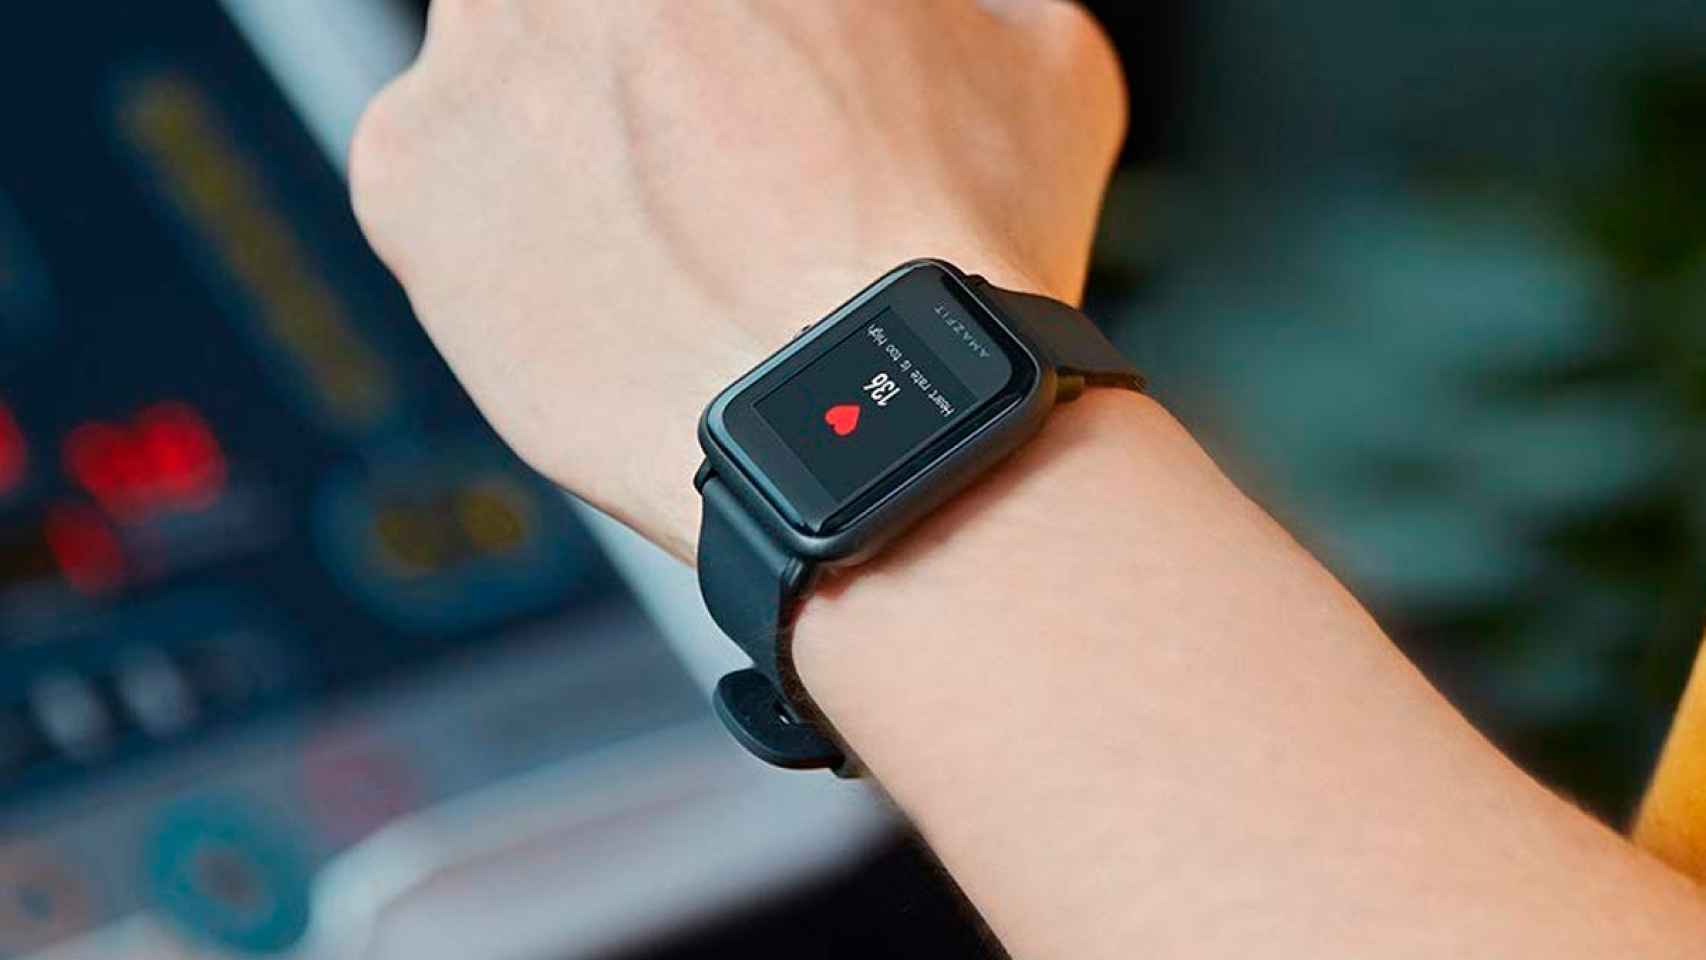 Xiaomi Amazfit Watch